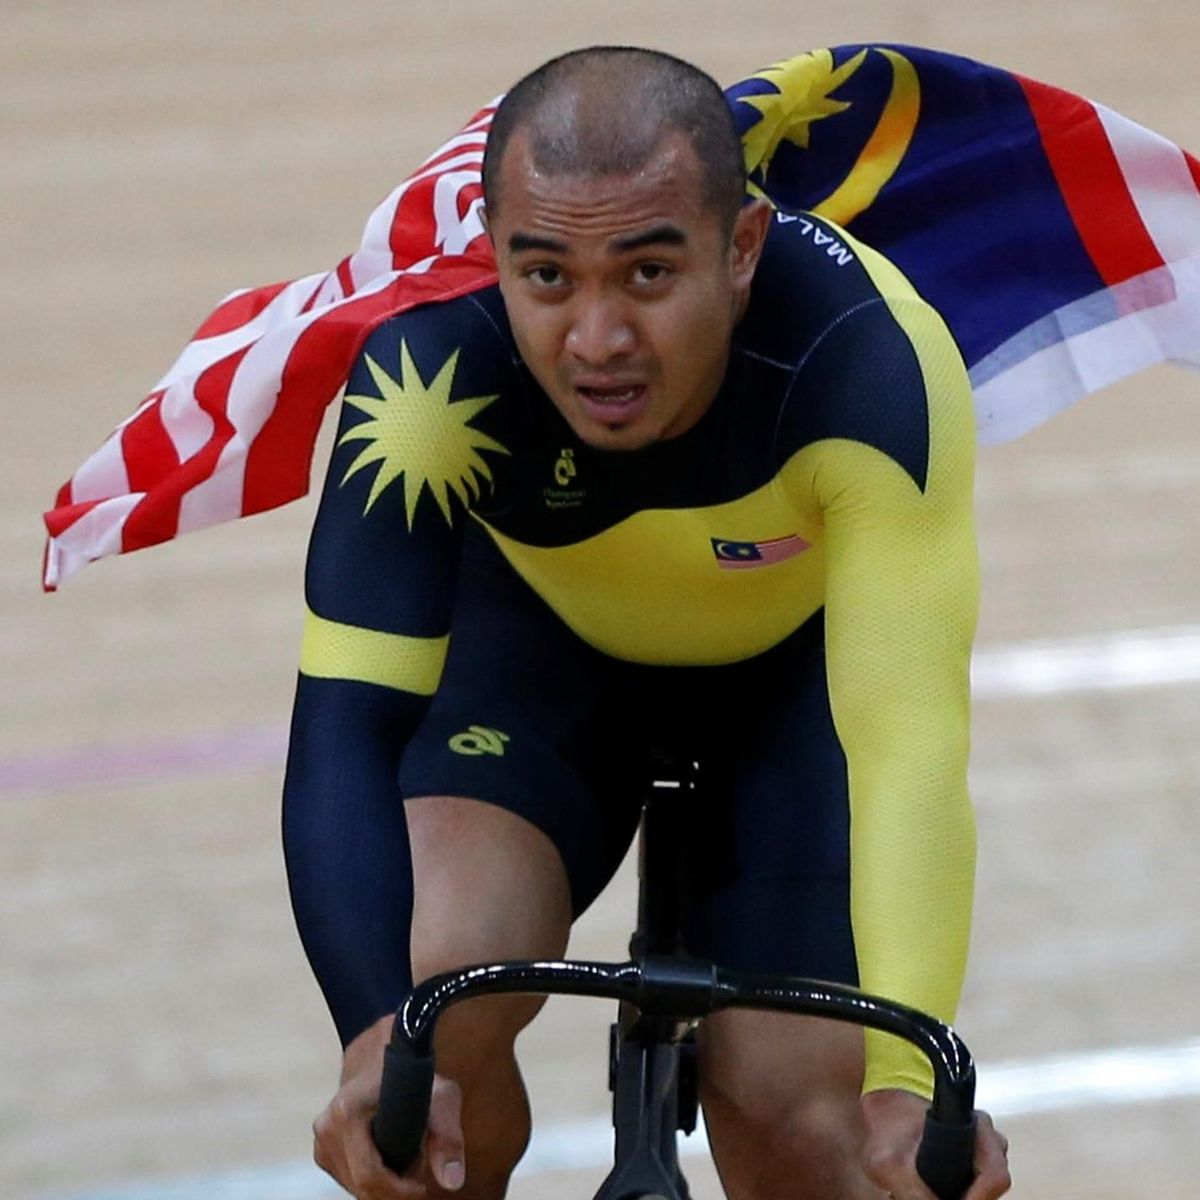 Azizul hasni awang olympic schedule